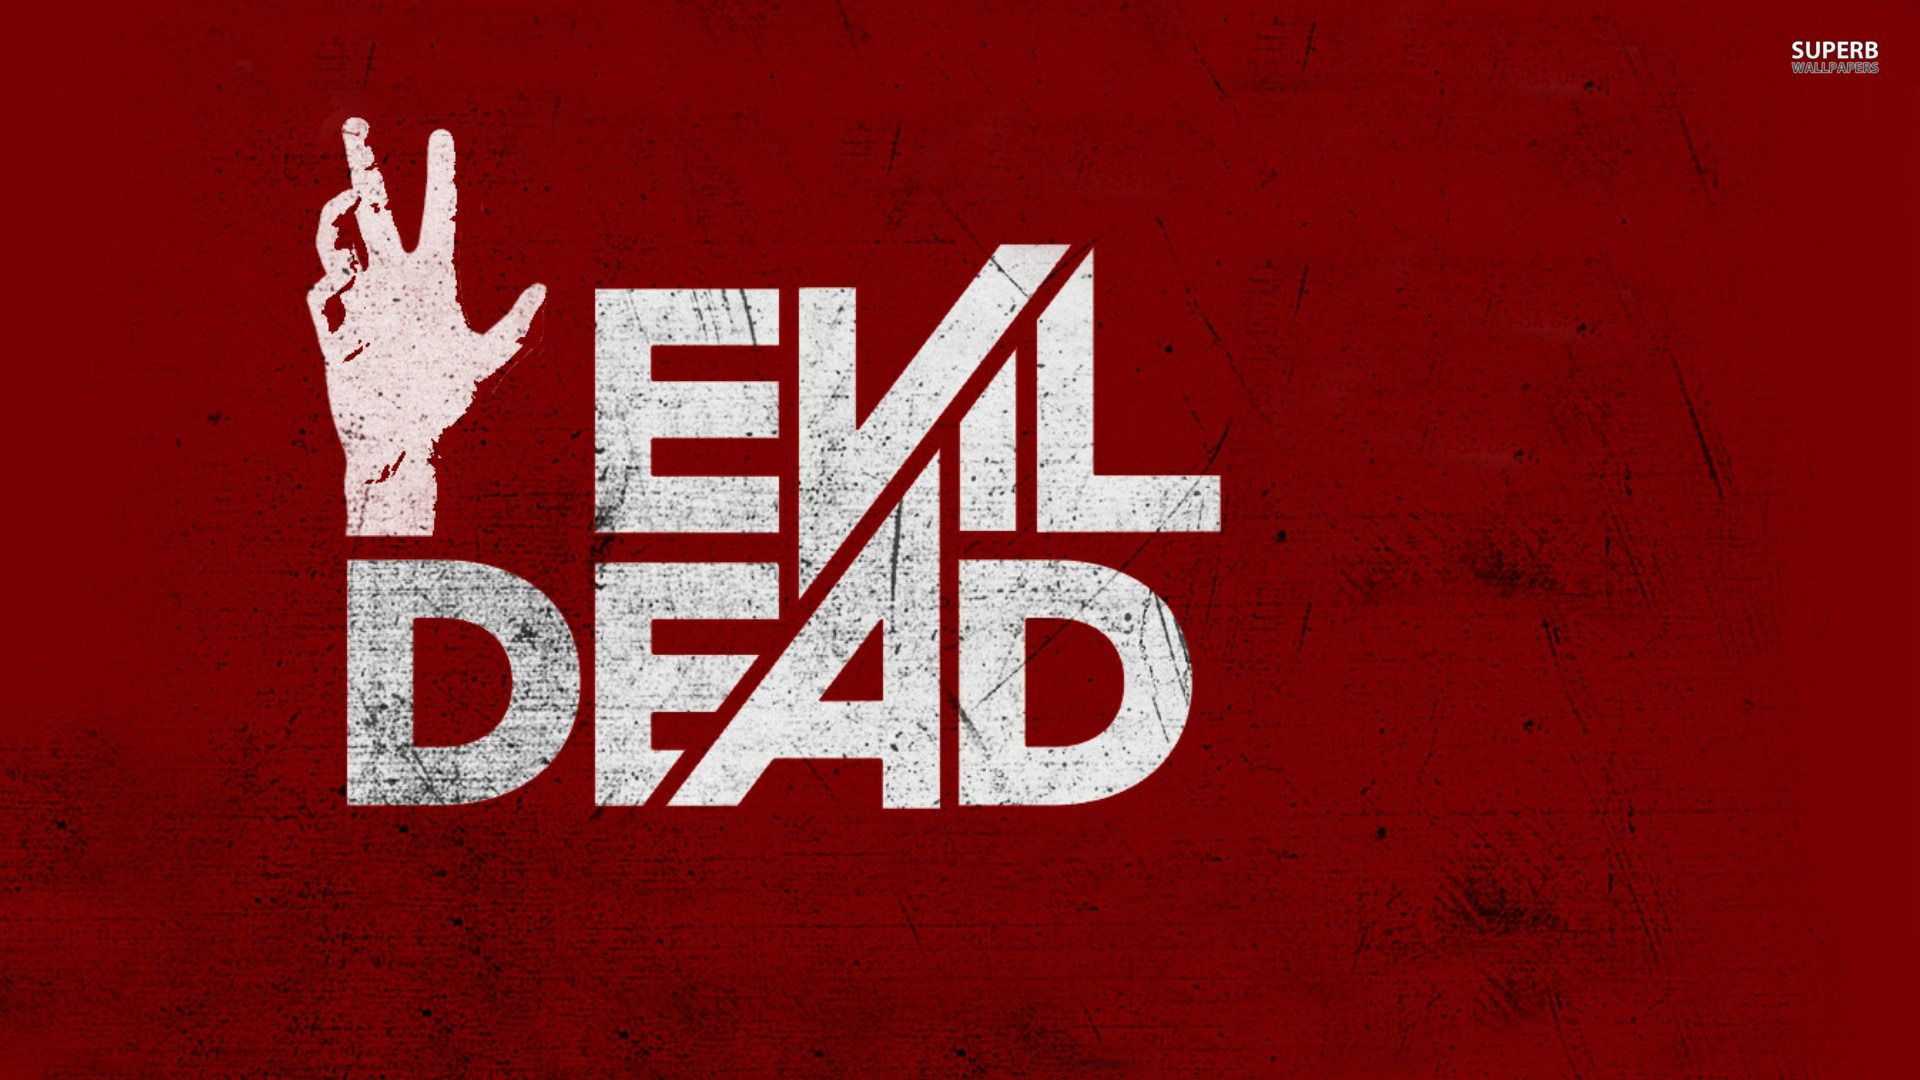 Evil Dead wallpaper - Movie wallpapers -